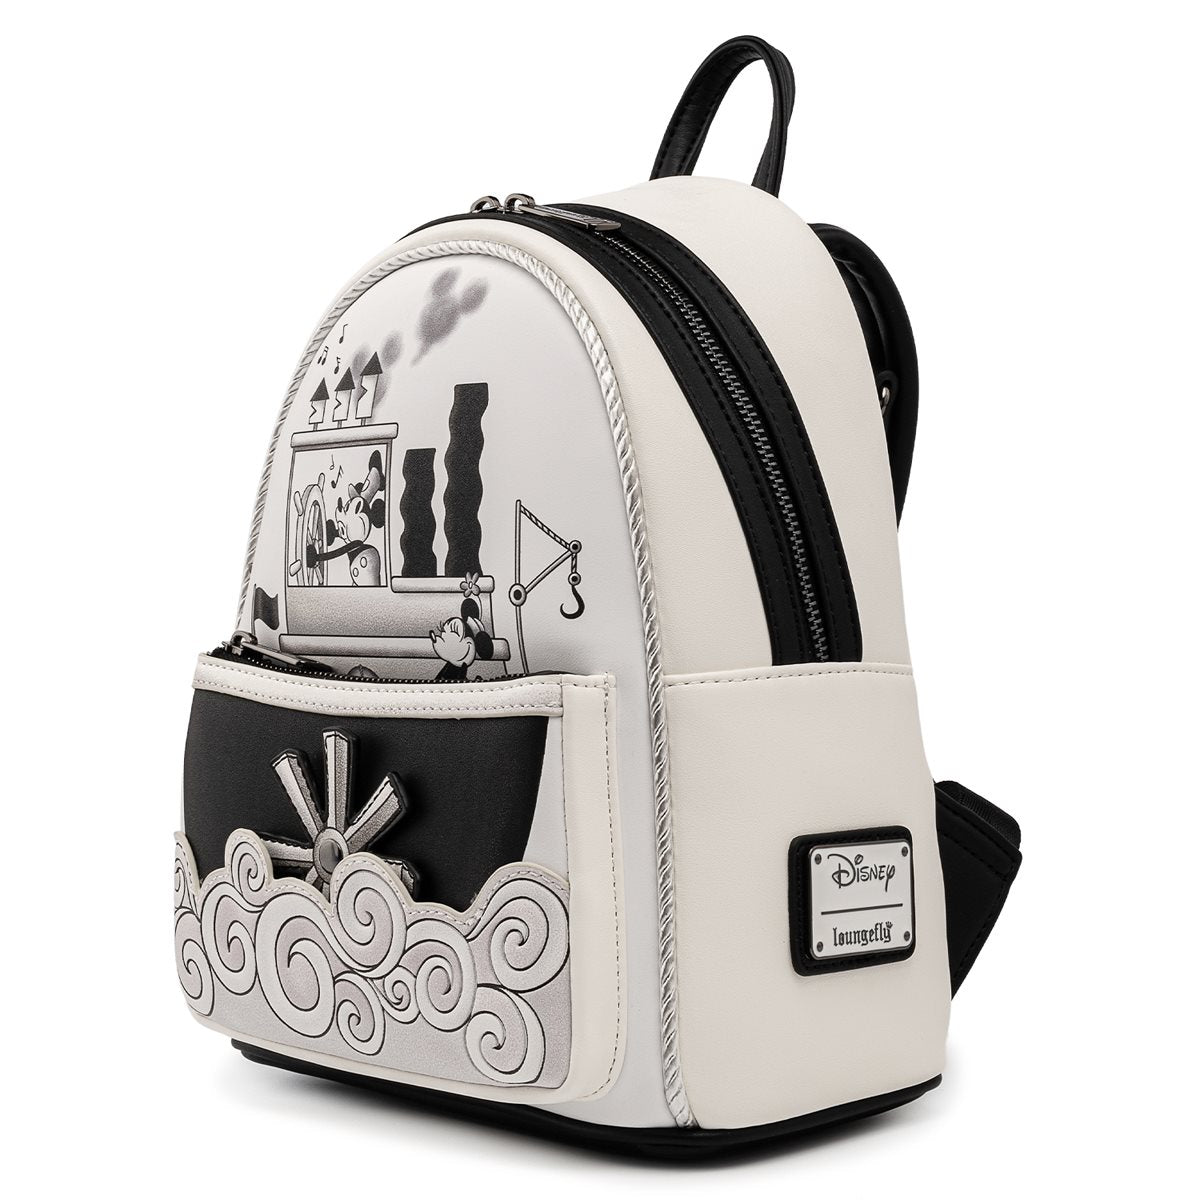 Steamboat Willie Music Cruise Mini Backpack